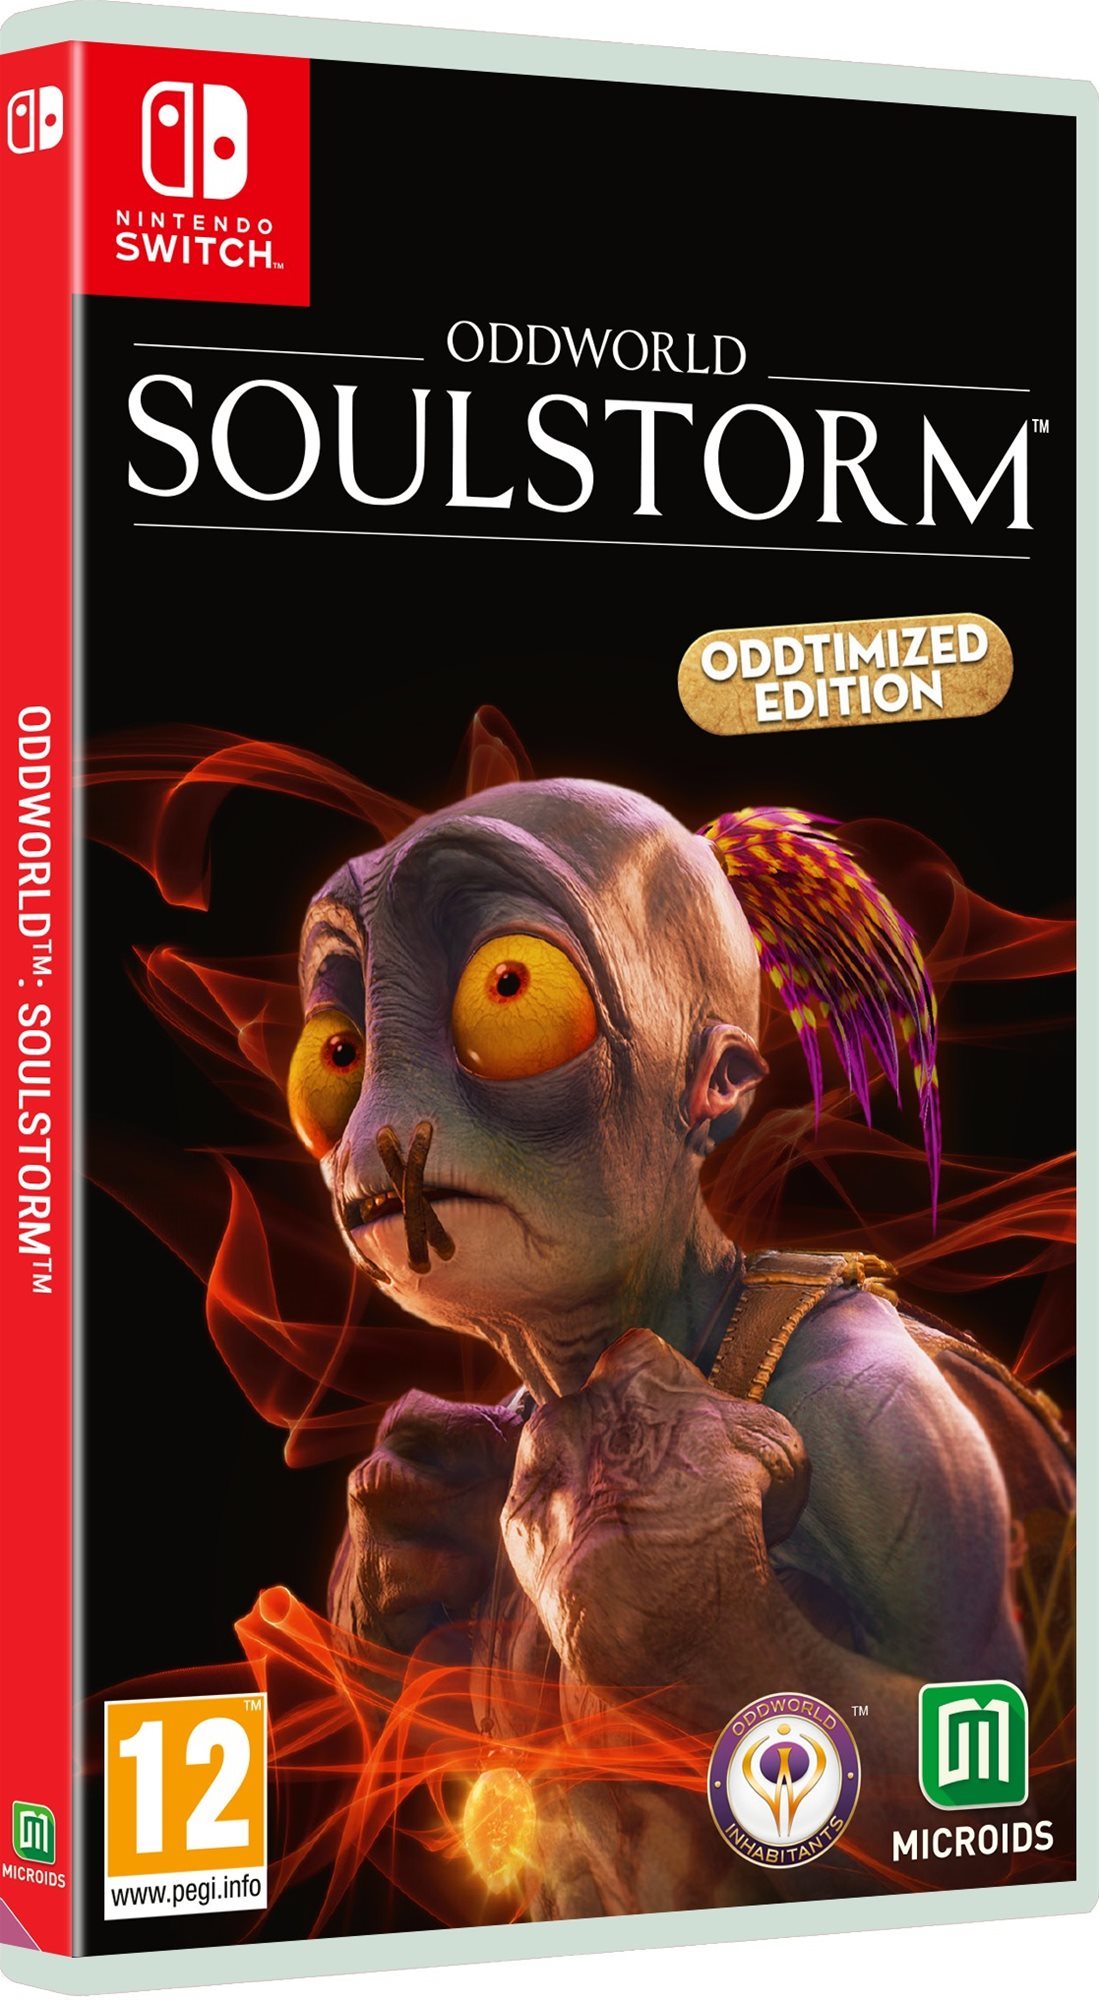 Oddworld: Soulstorm Collectors Oddition - Nintendo Switch